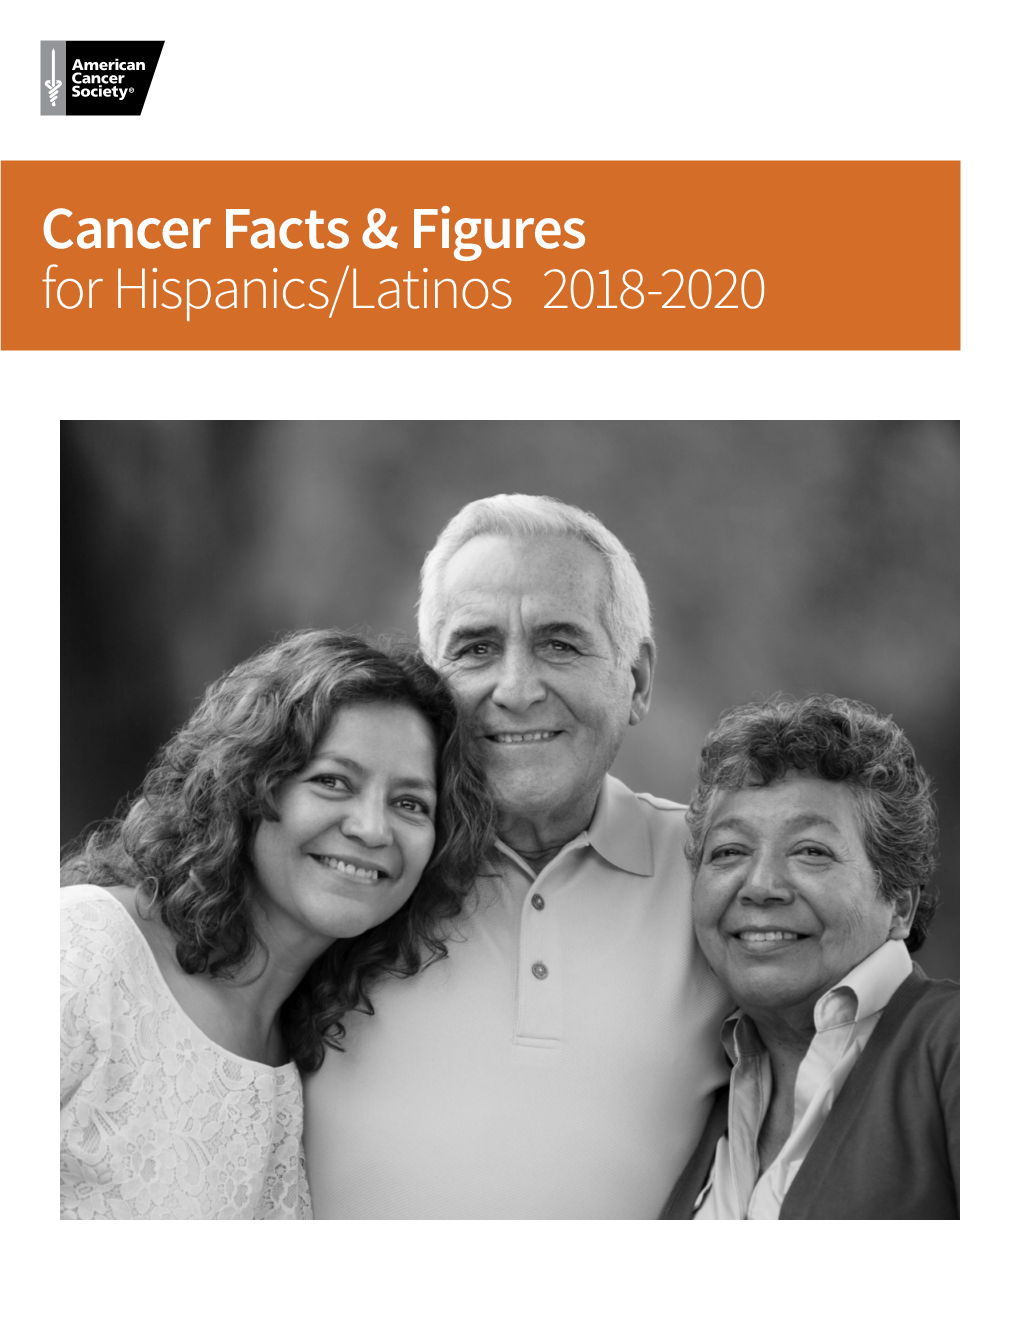 Cancer Facts & Figures for Hispanics/Latinos